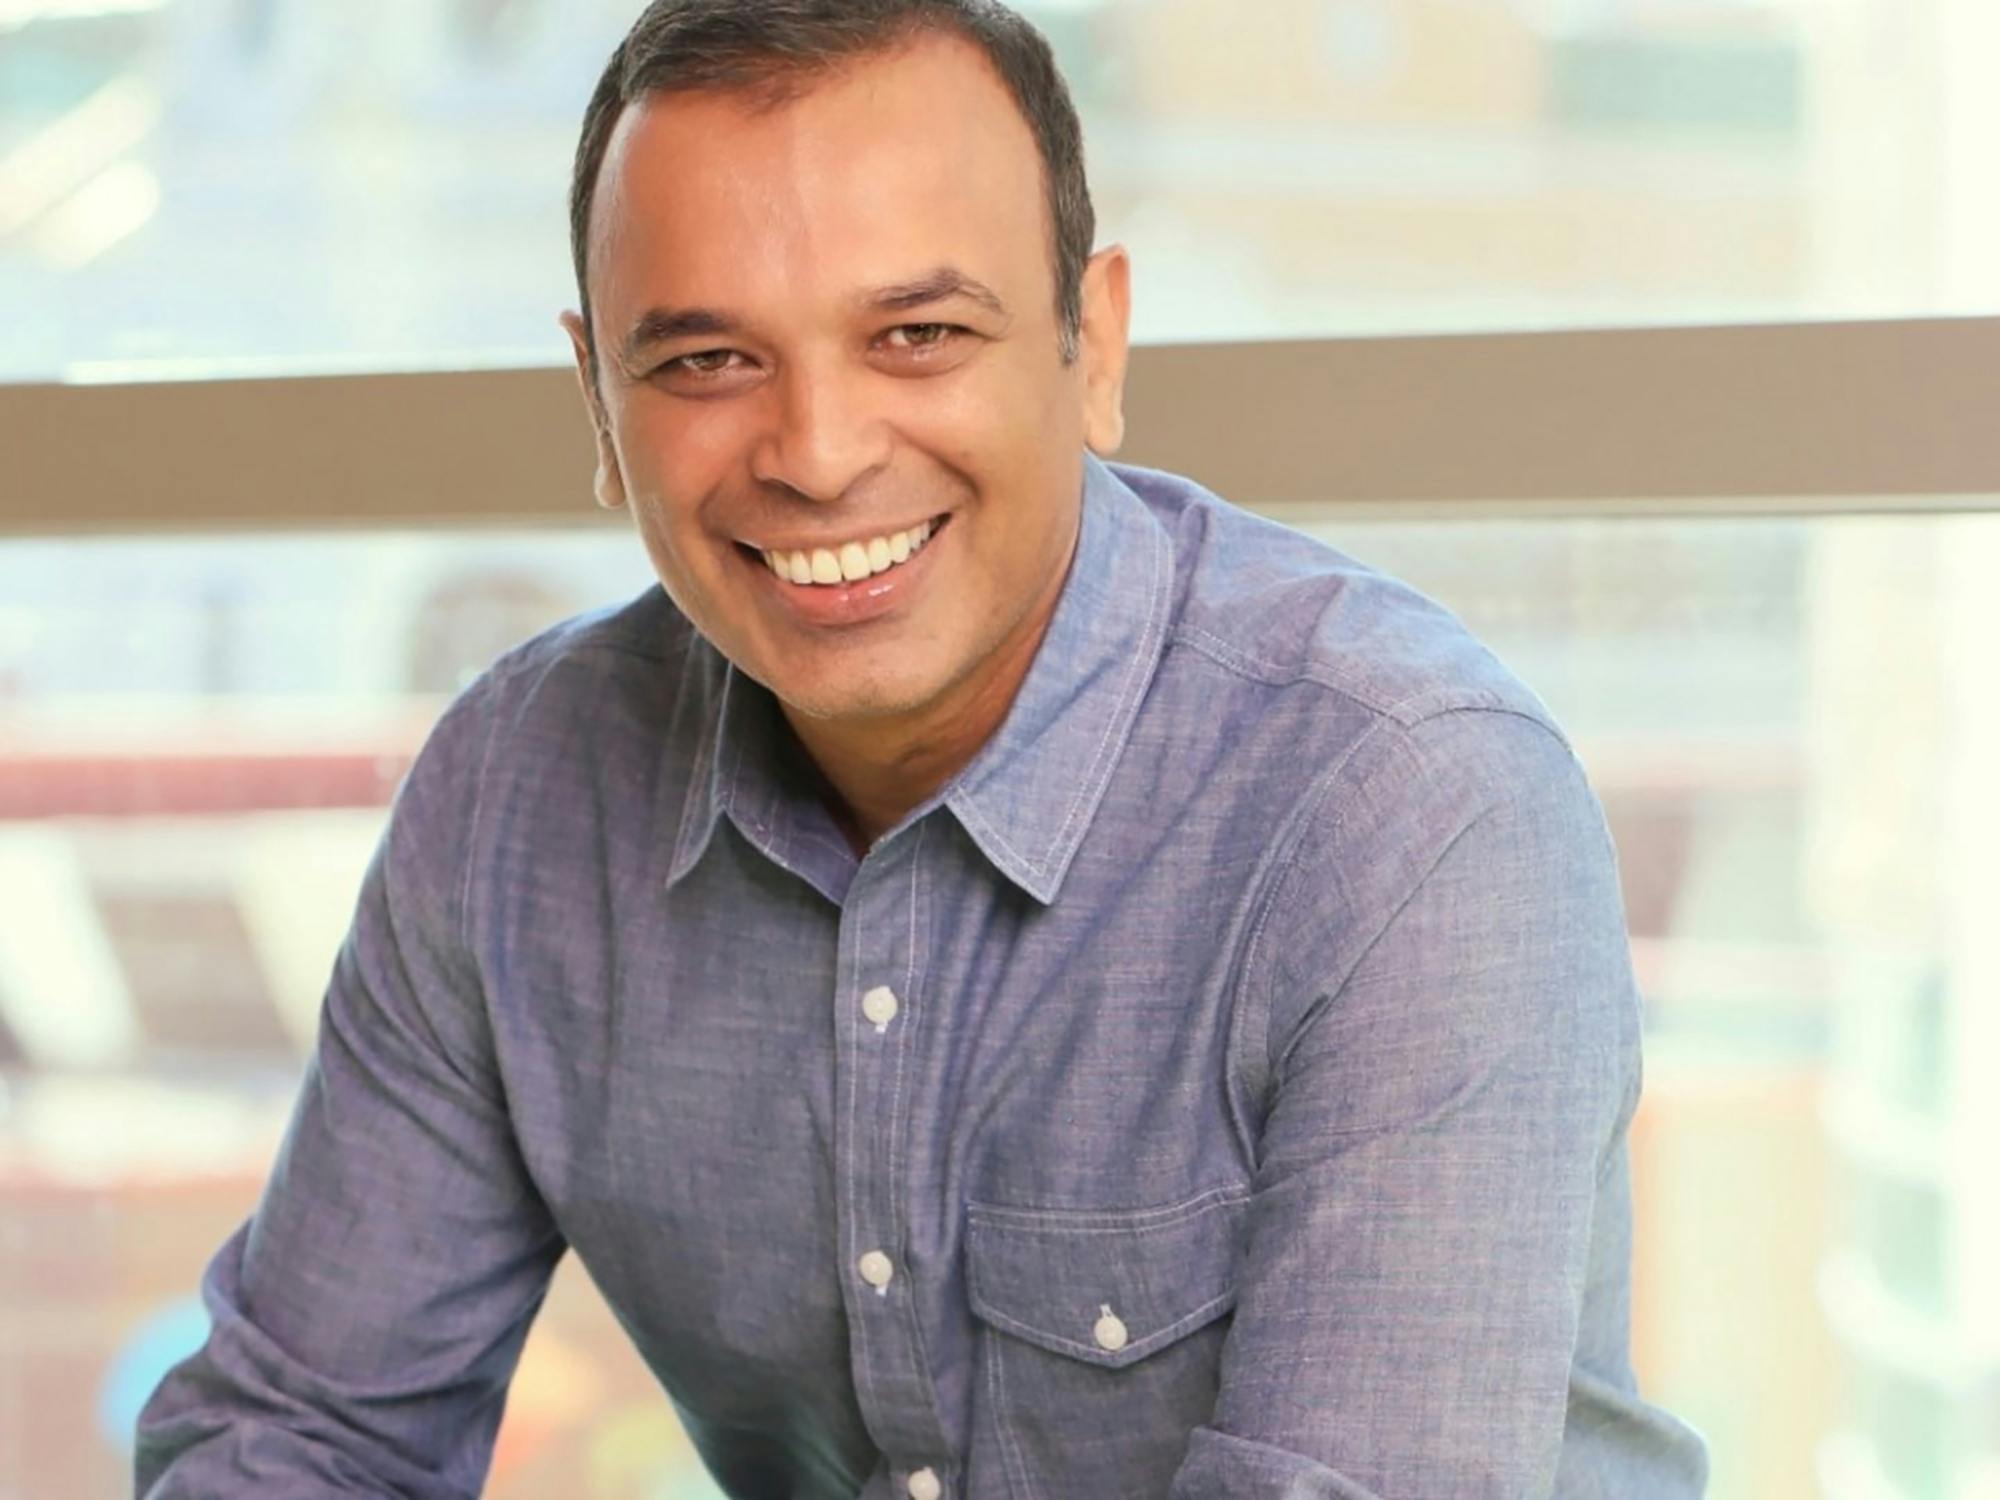 Portrait of a man smiling, Vinoo Vijay, Chief Marketing Officer at Truist